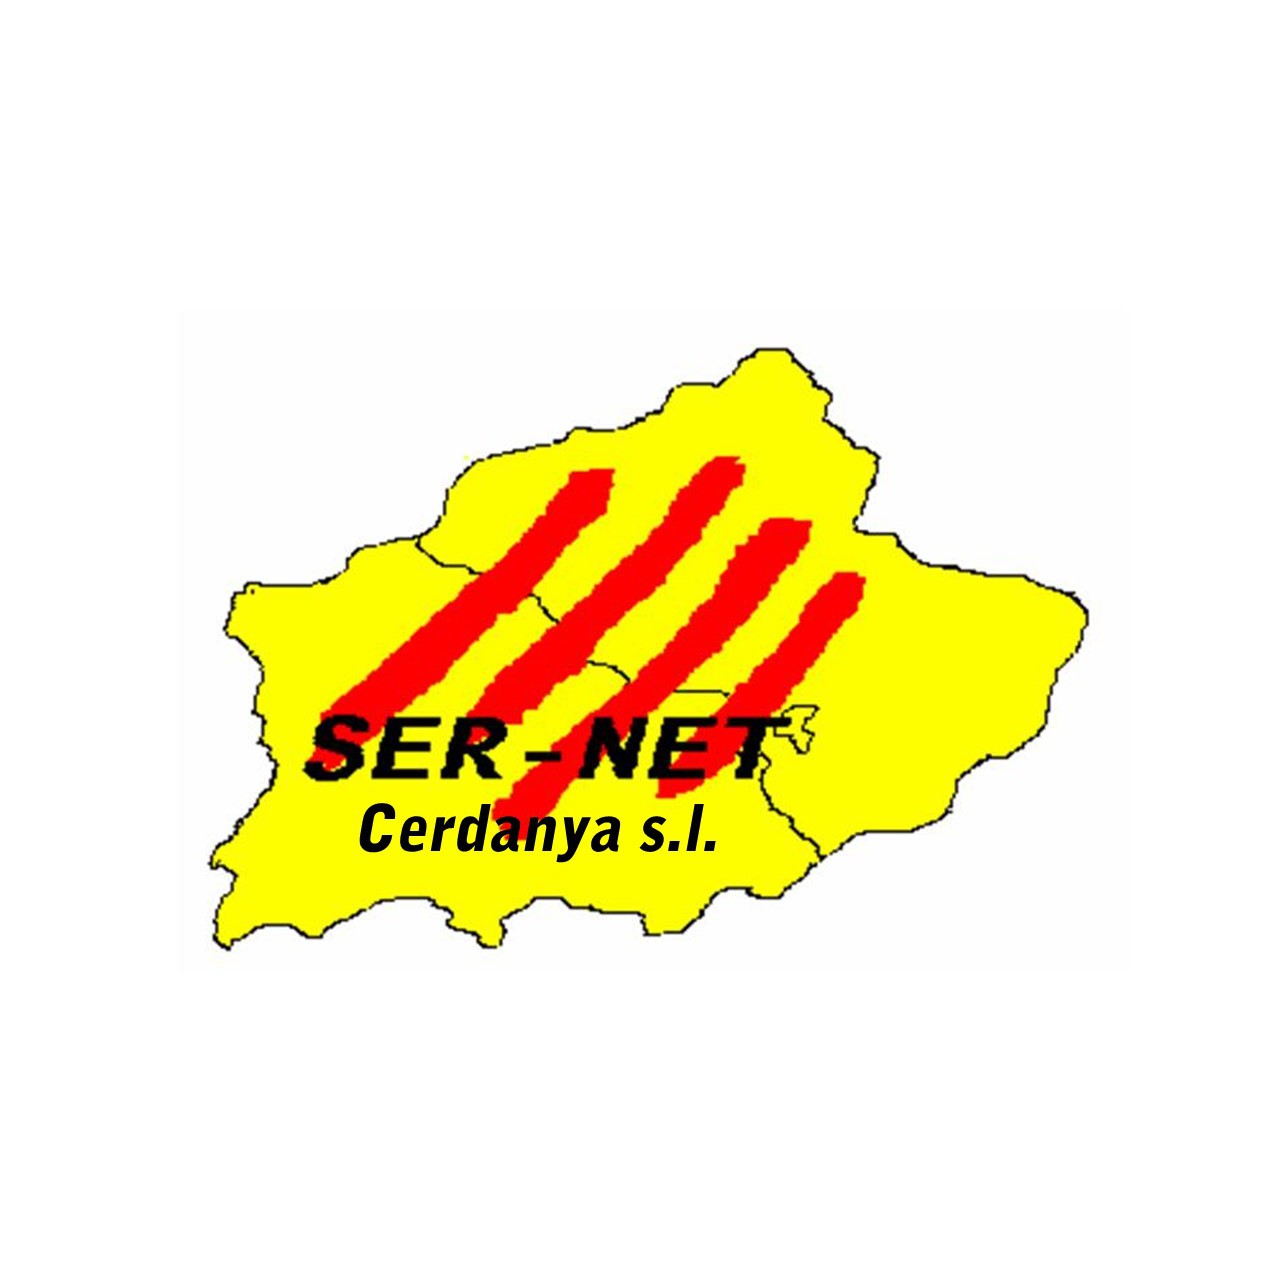 Ser - Net Cerdanya Logo